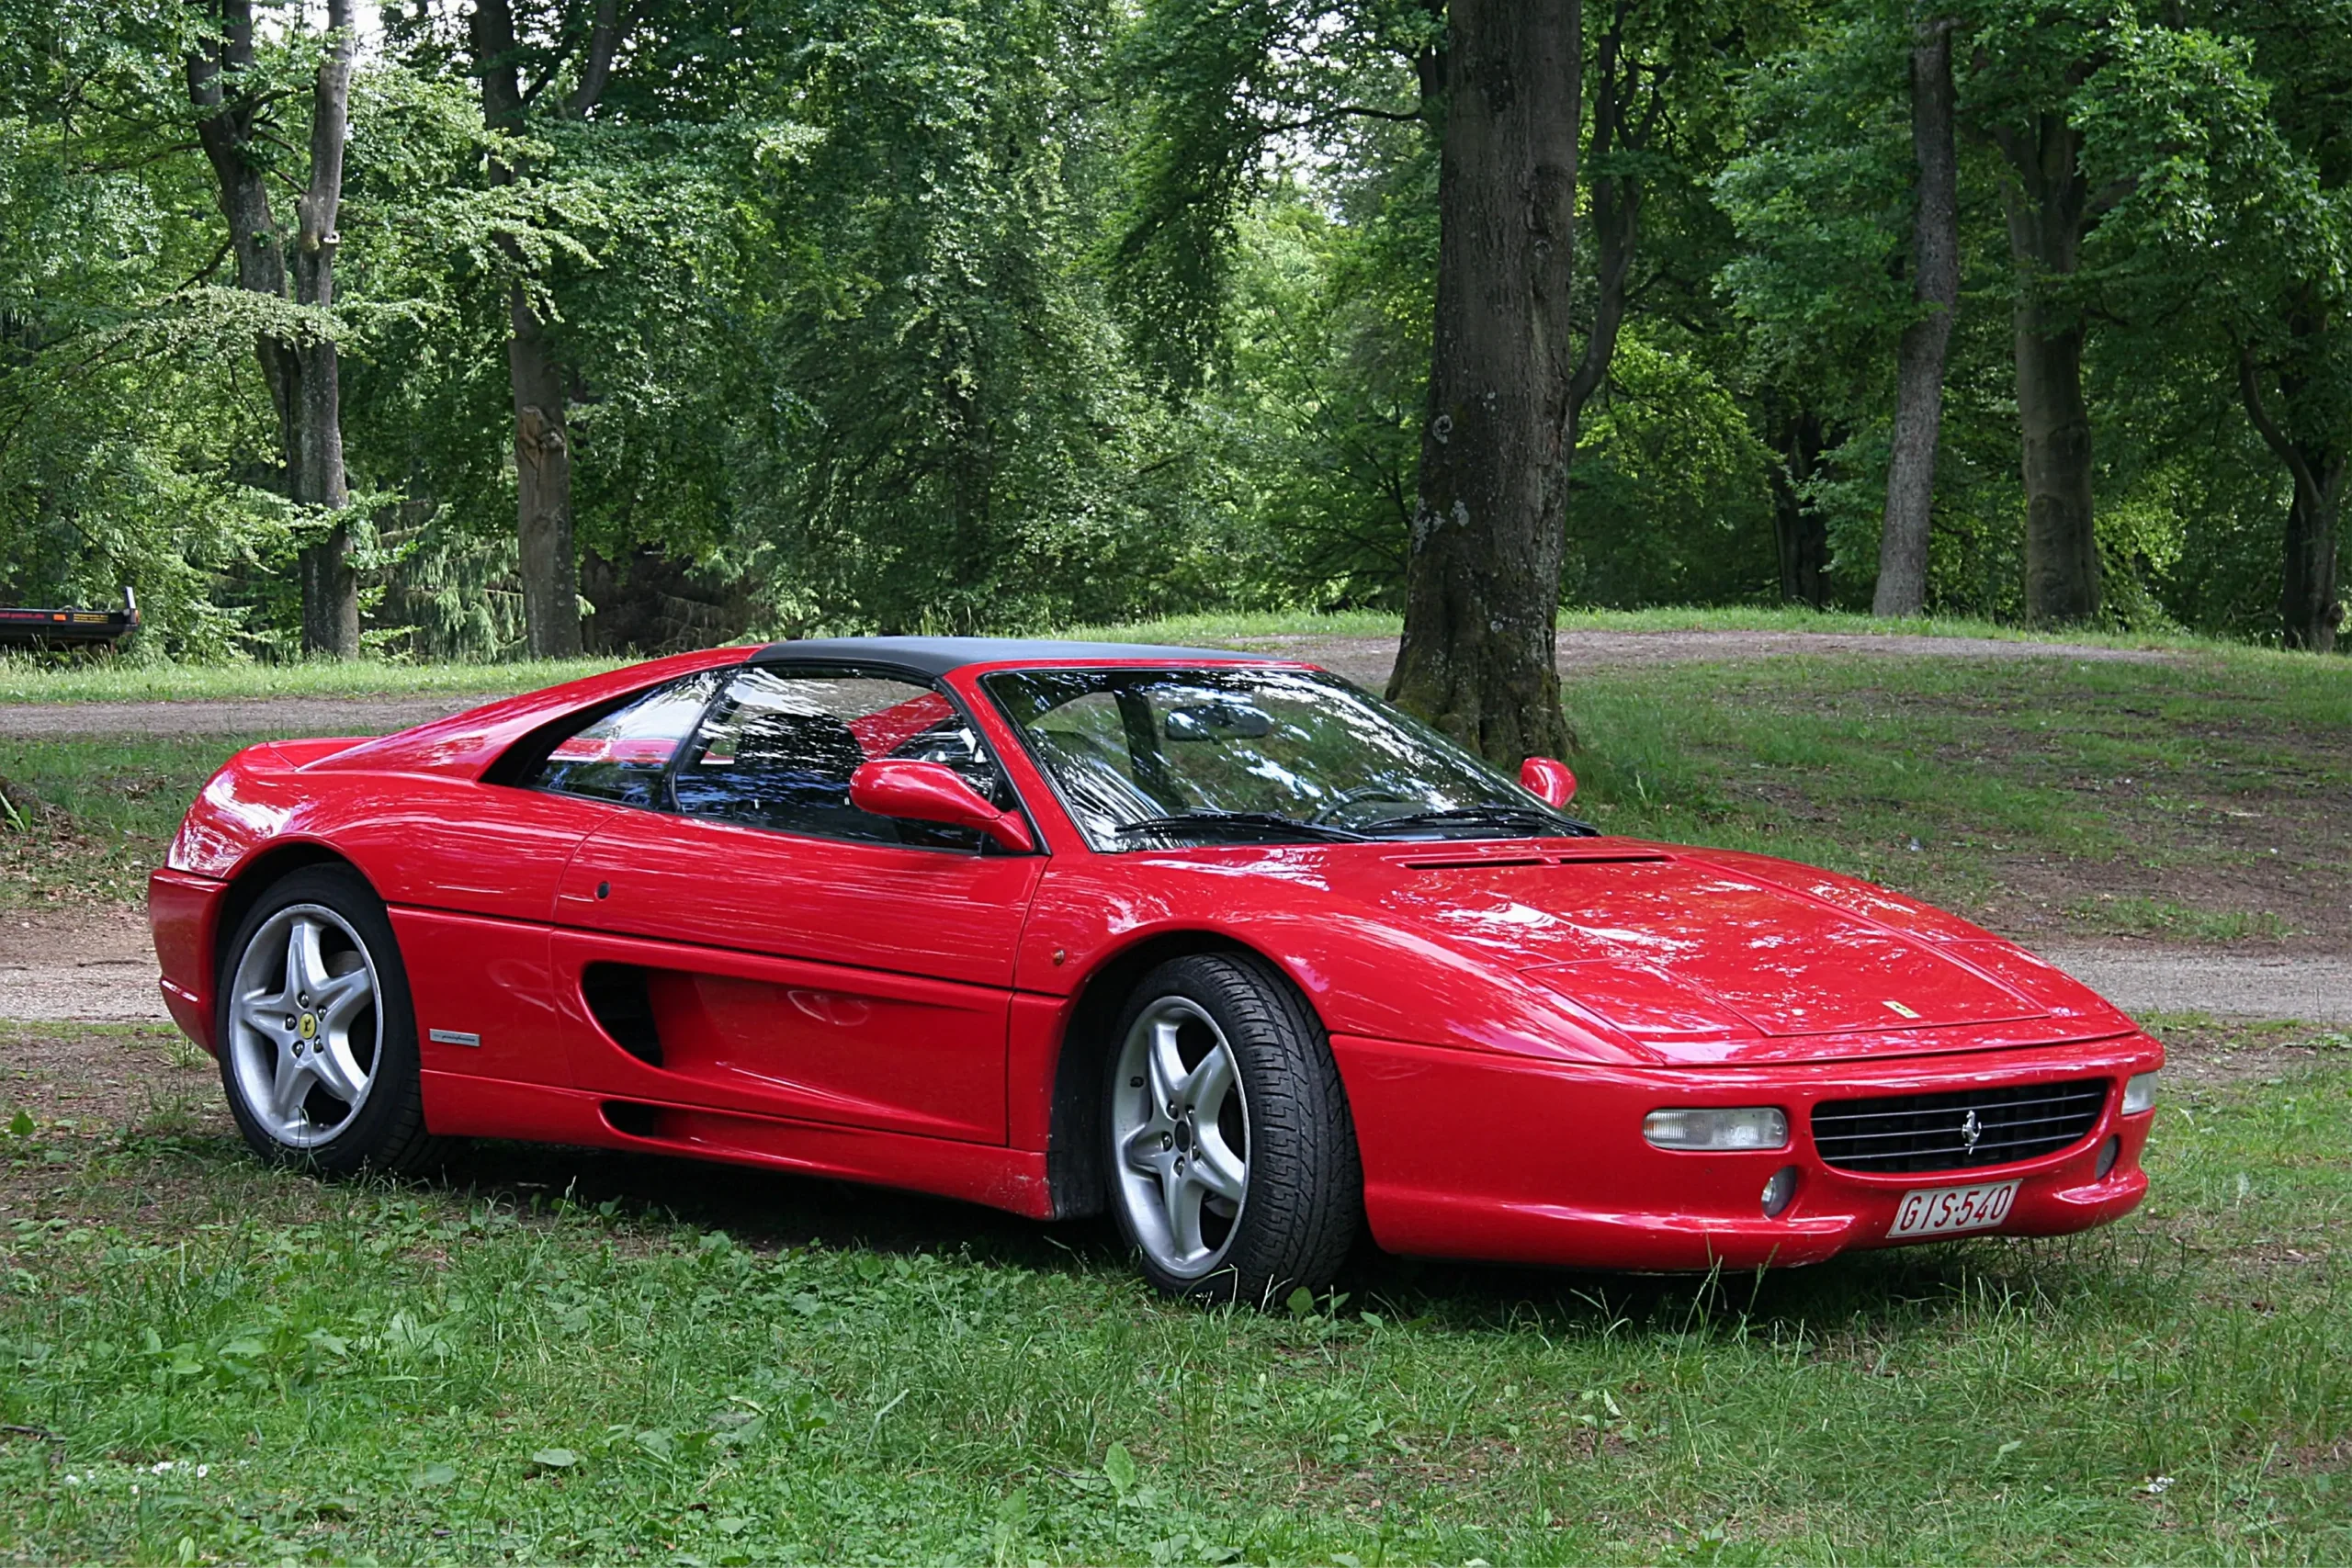 ferrari 90's models - What was the best Ferrari in the 90s